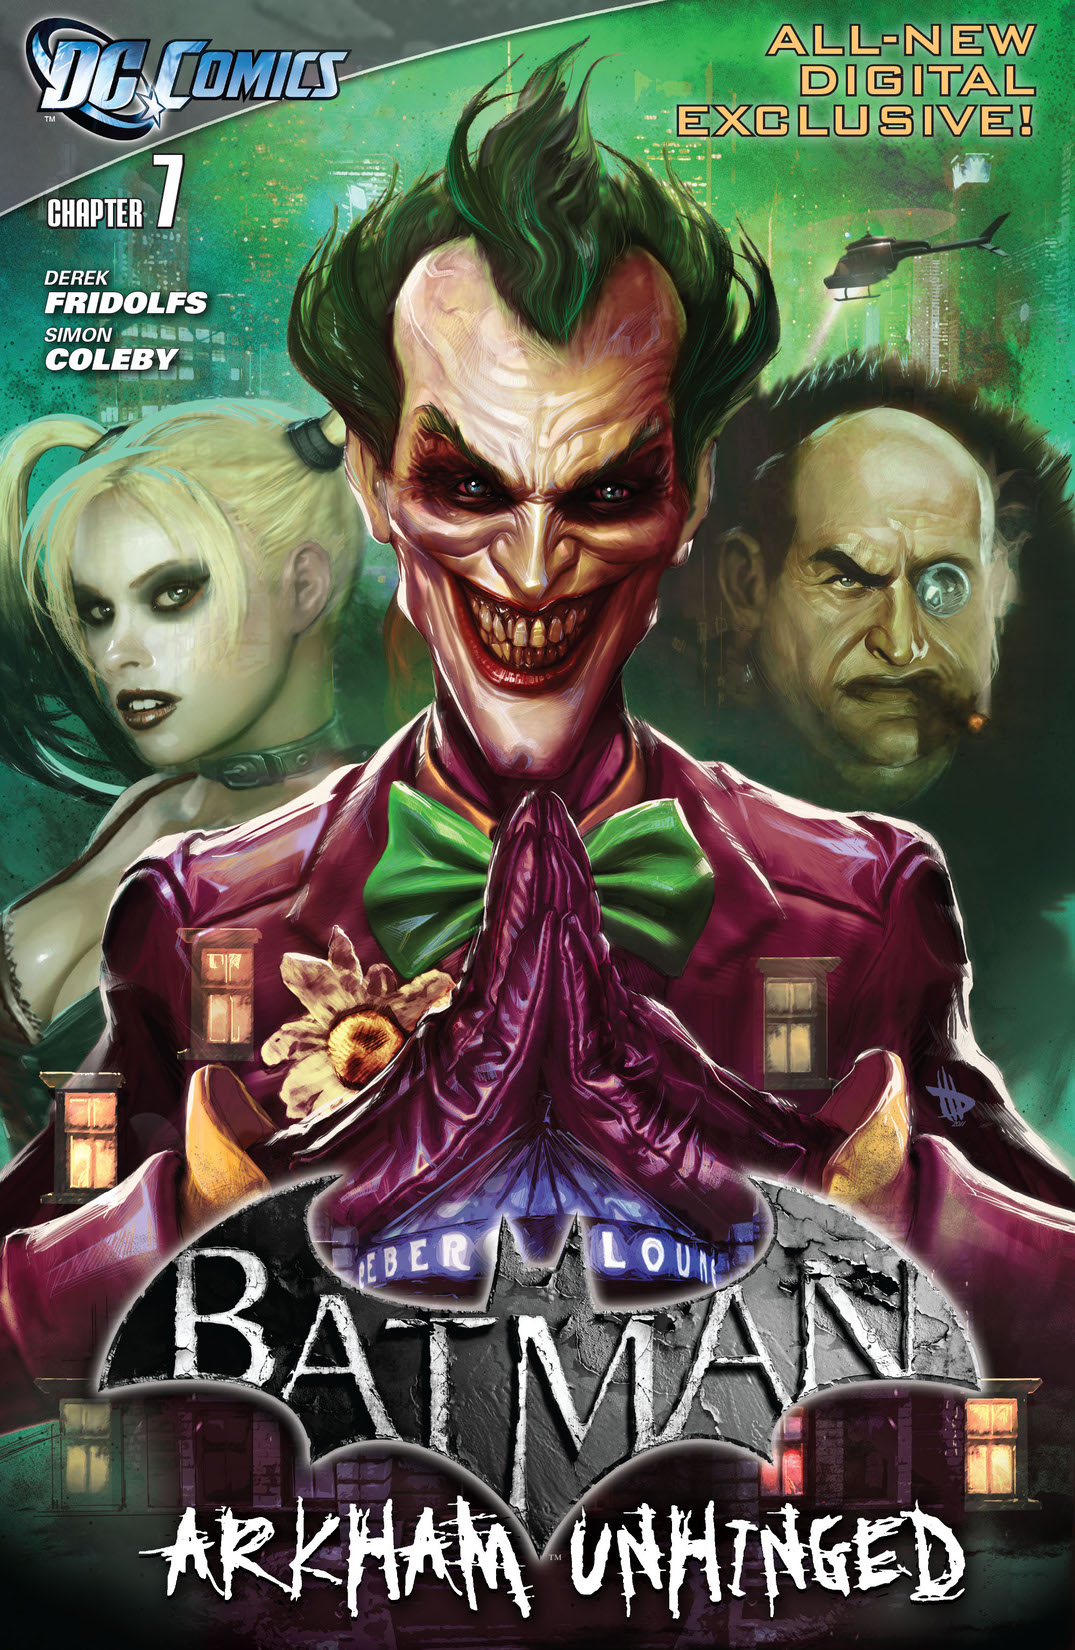 Batman: Arkham Unhinged #7 preview images